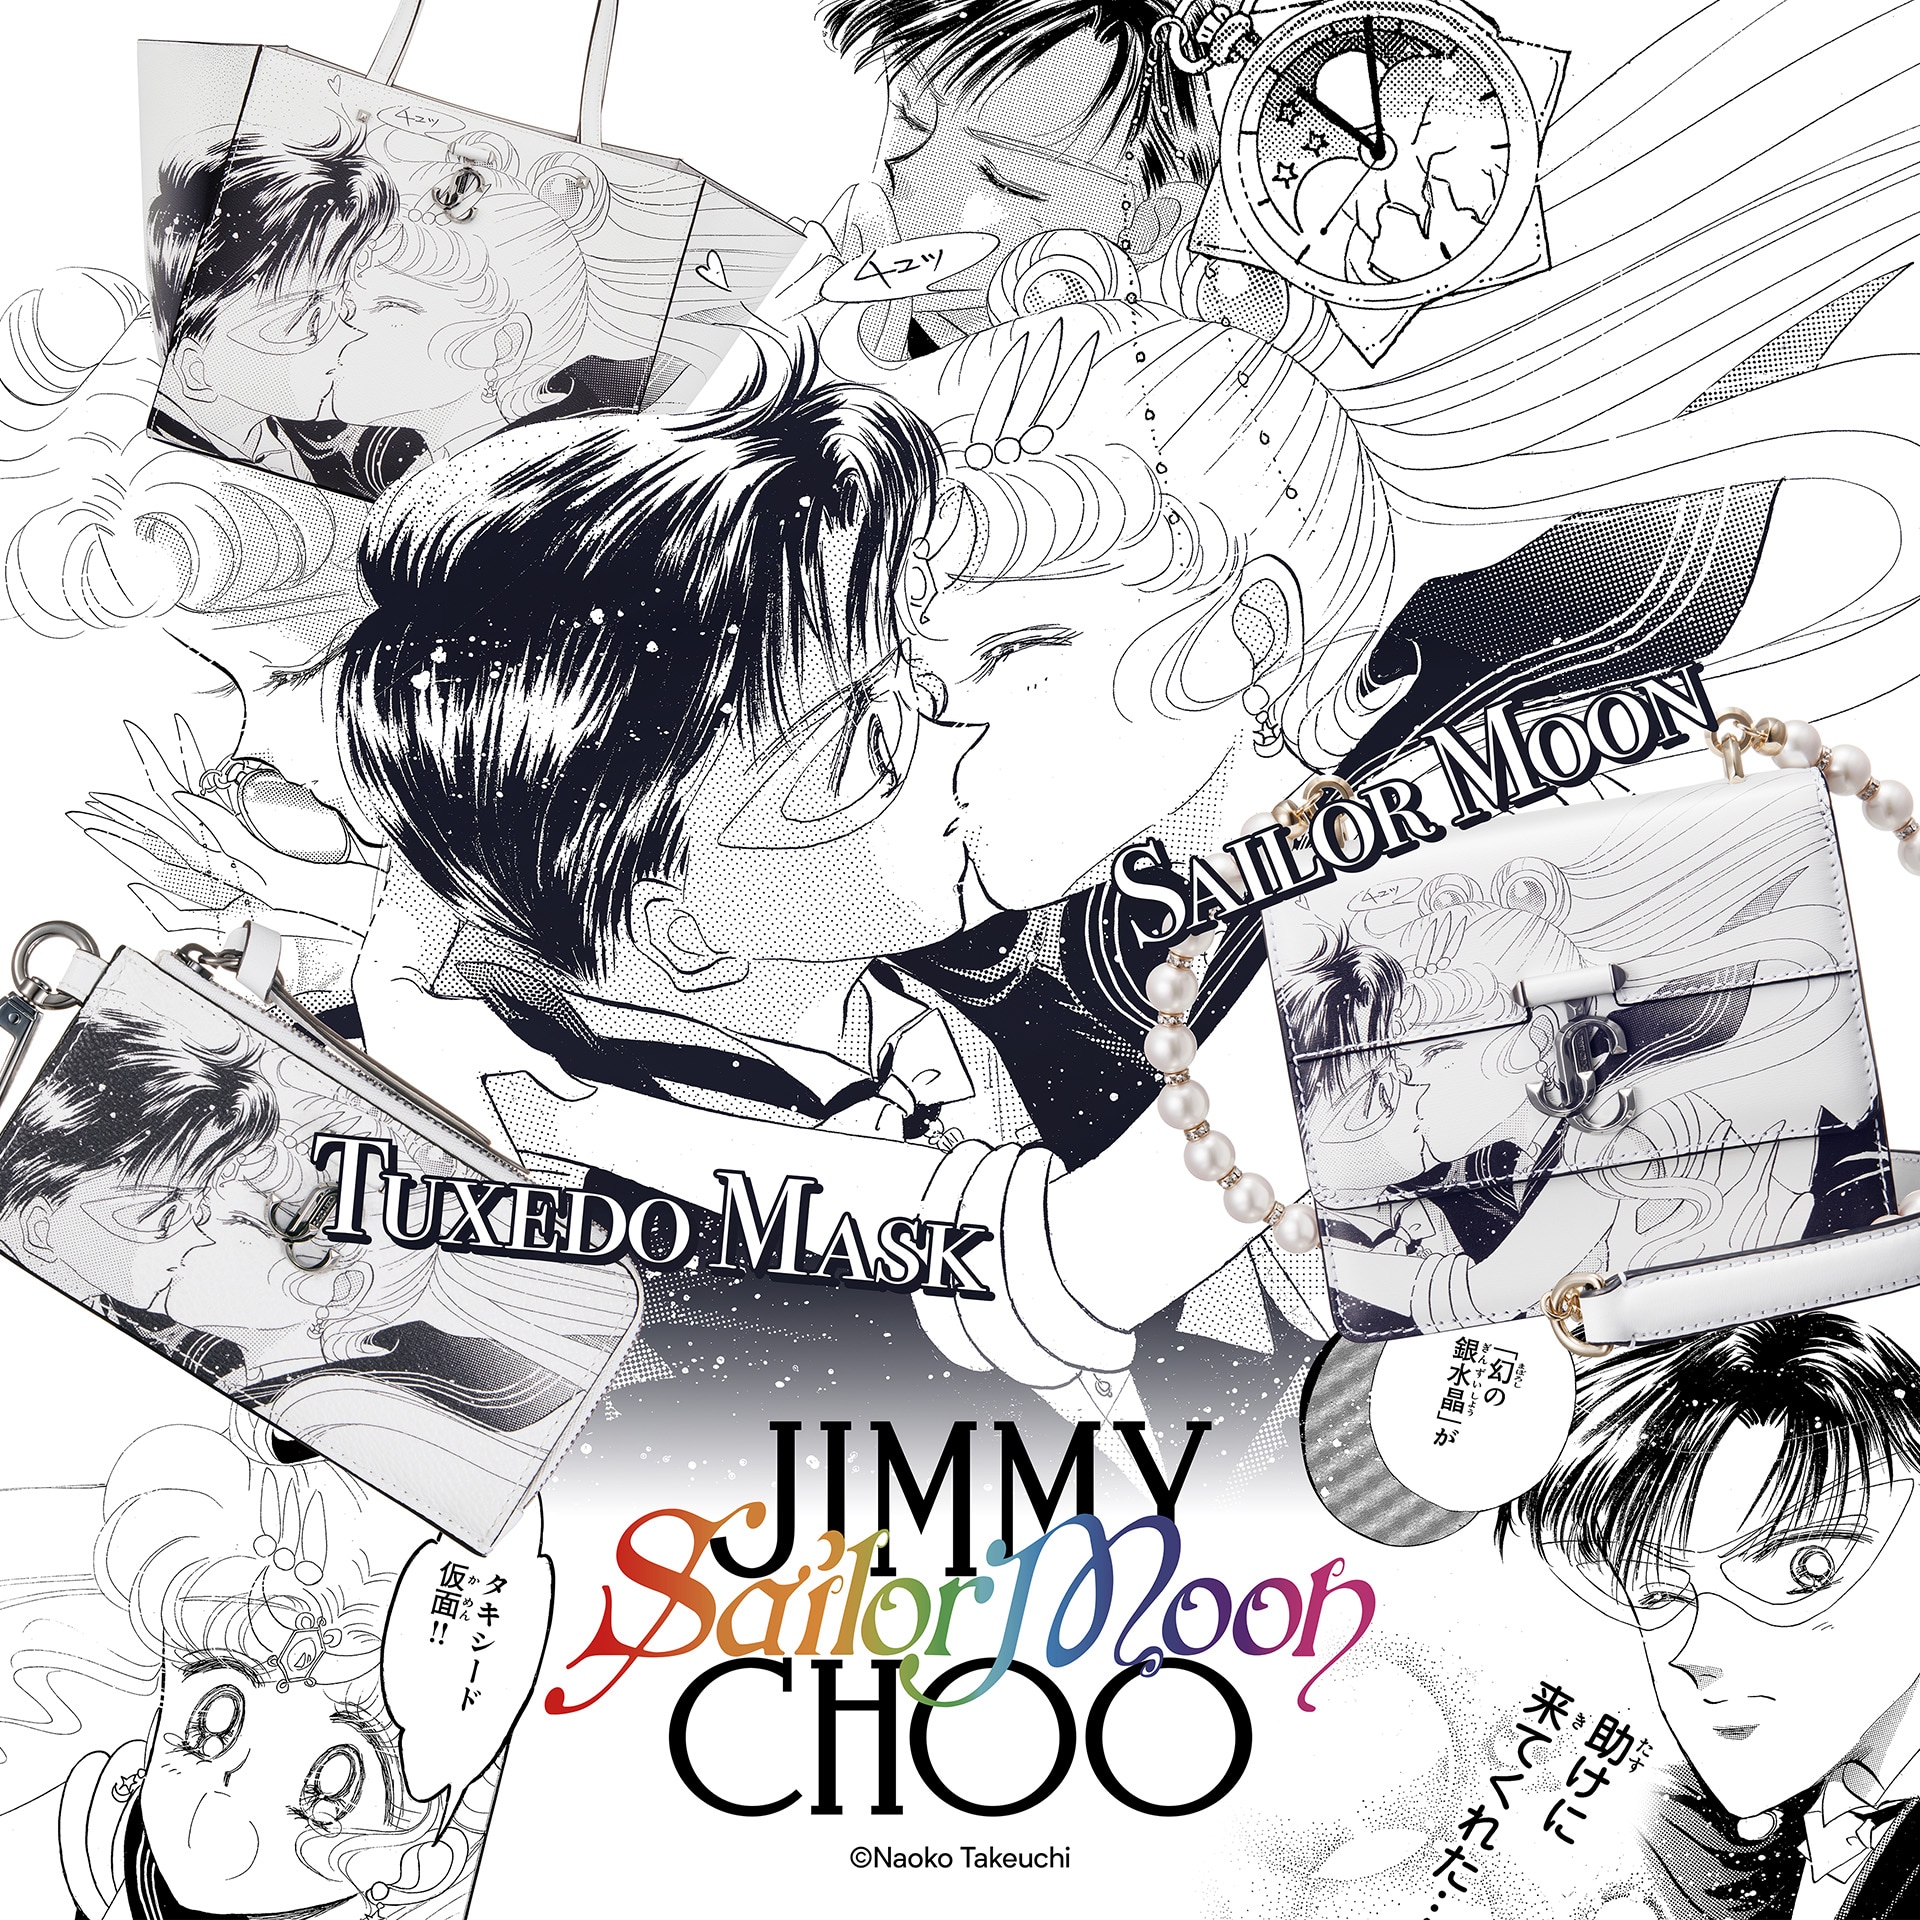 Jimmy Choo x Pretty Guardian Sailor Moon: An Exclusive